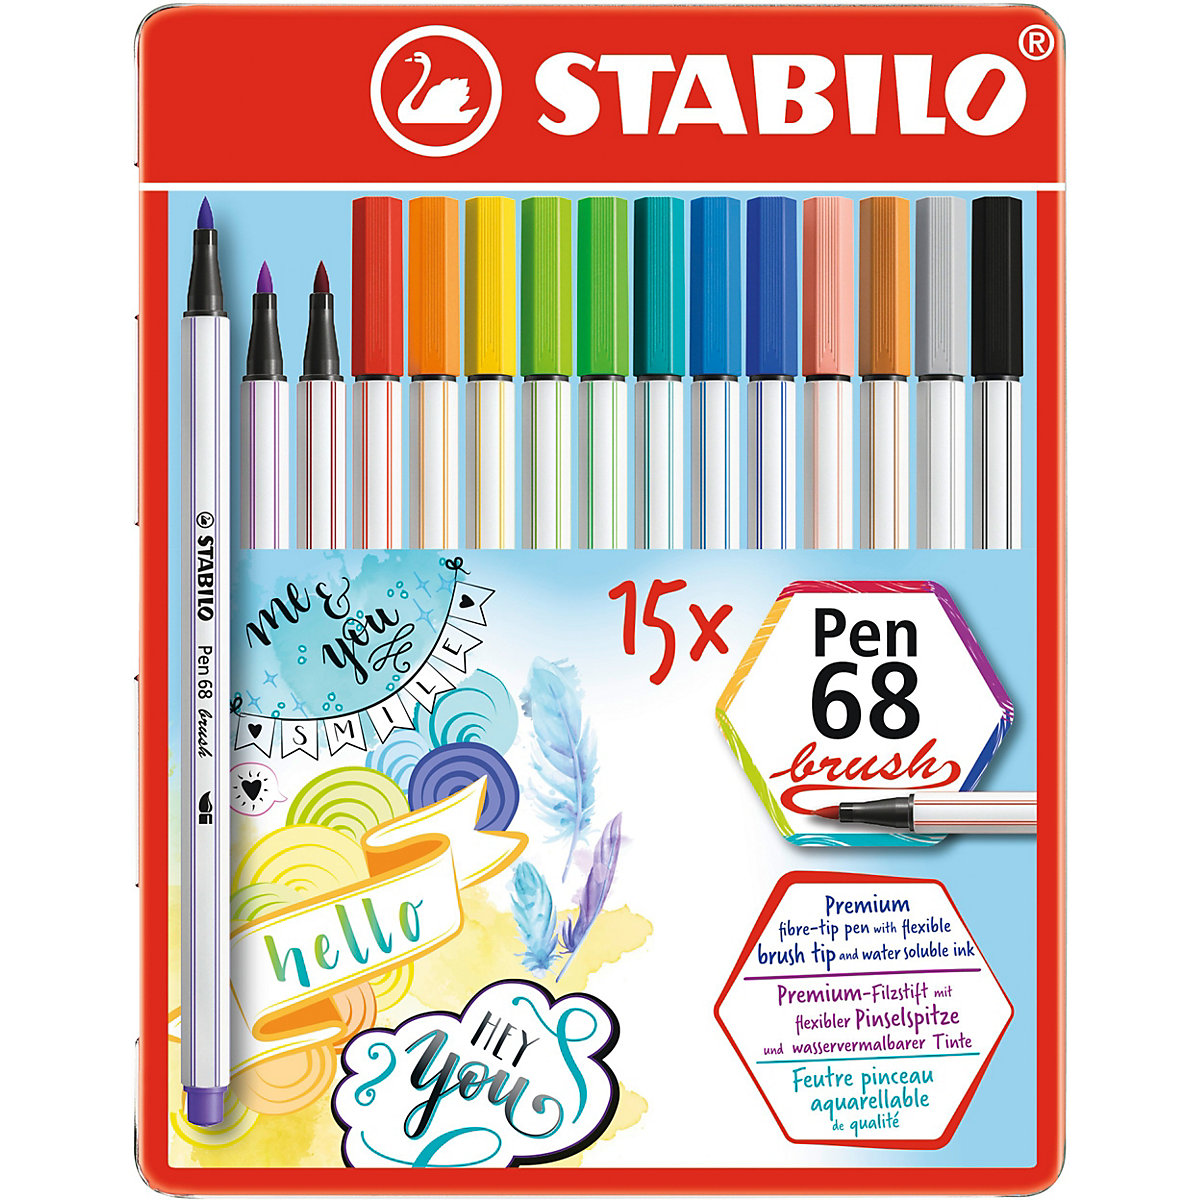 STABILO Premium-Filzstifte Pen 68 brush 15 Farben im Metalletui